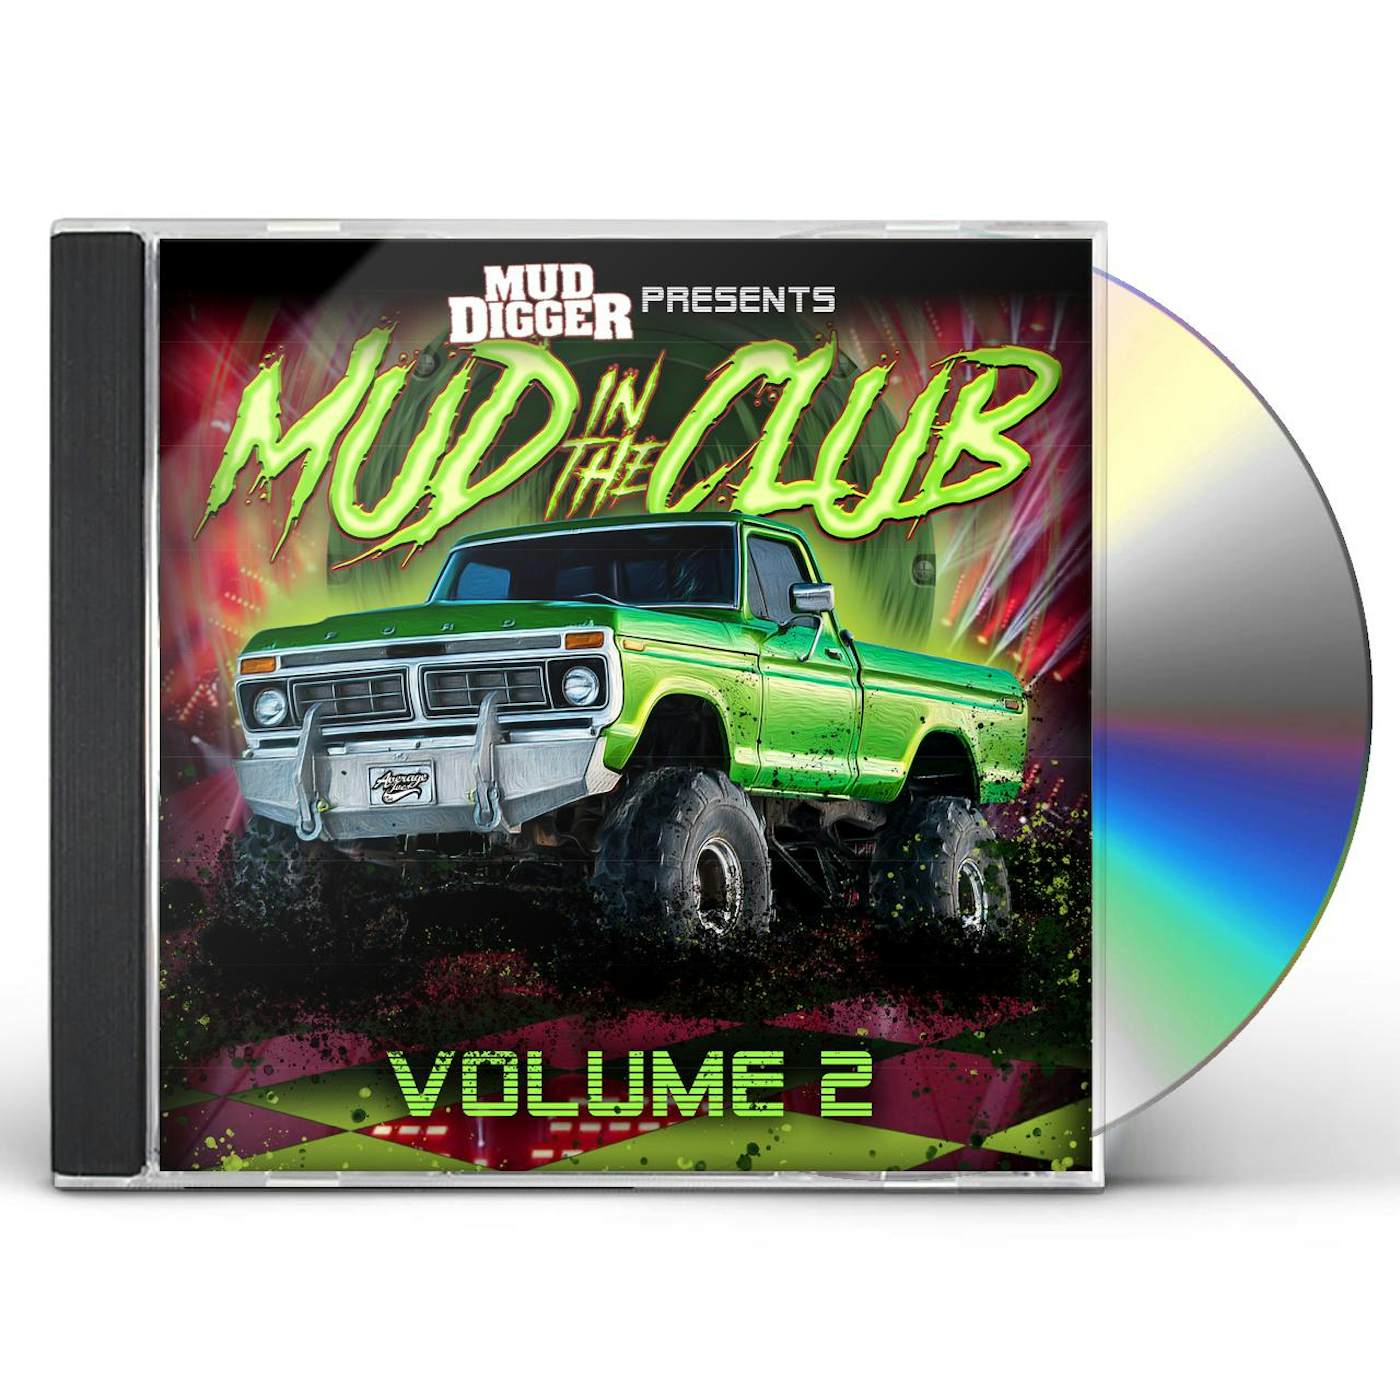 Mud Digger MUD IN THE CLUB VOLUME 2 CD